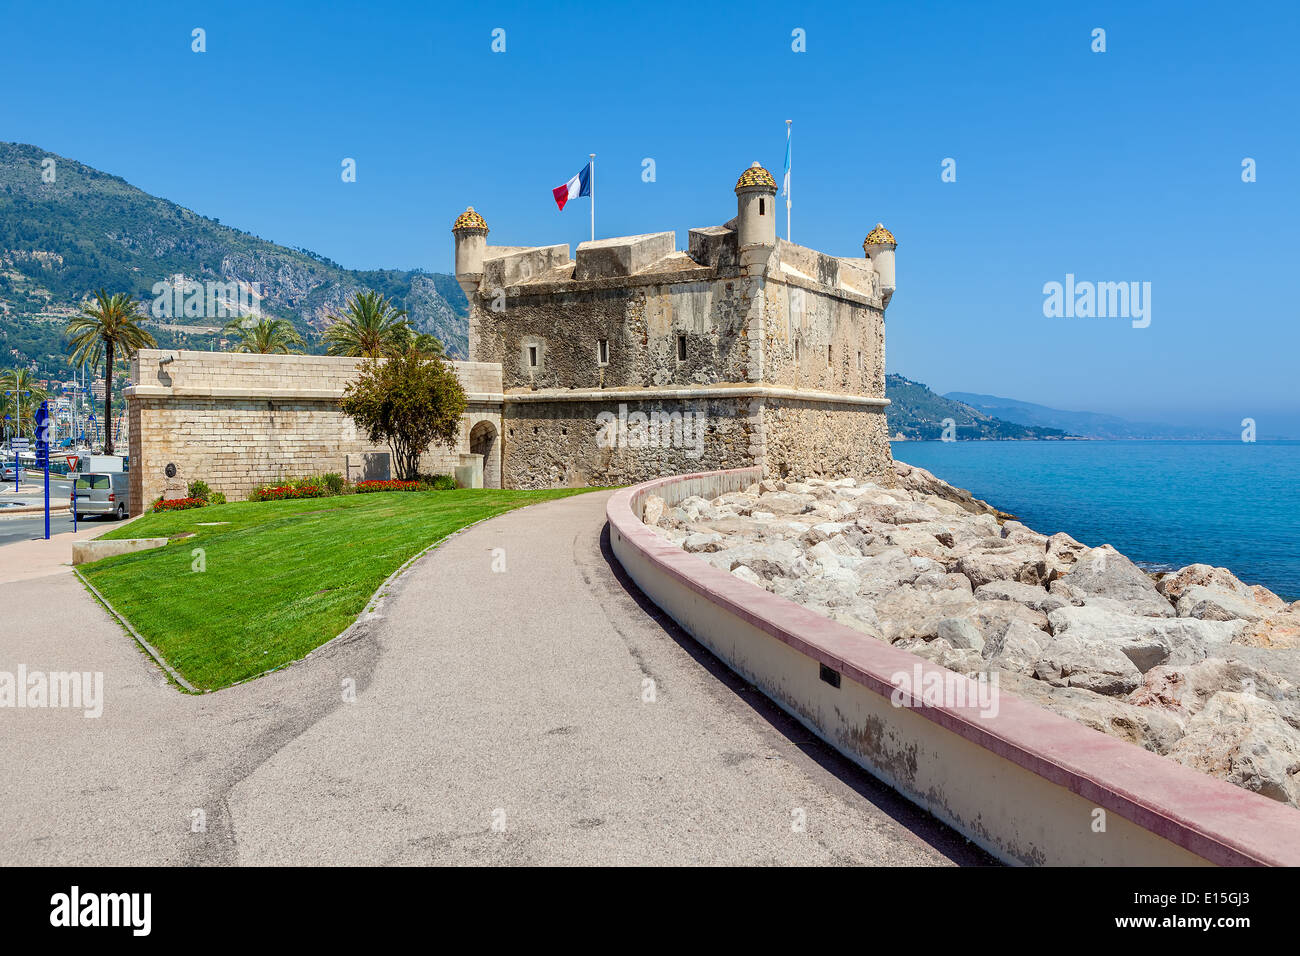 Promenade along Mediterranean sea coastline and small medieval fortress under blue sky in Menton, France. Stock Photo